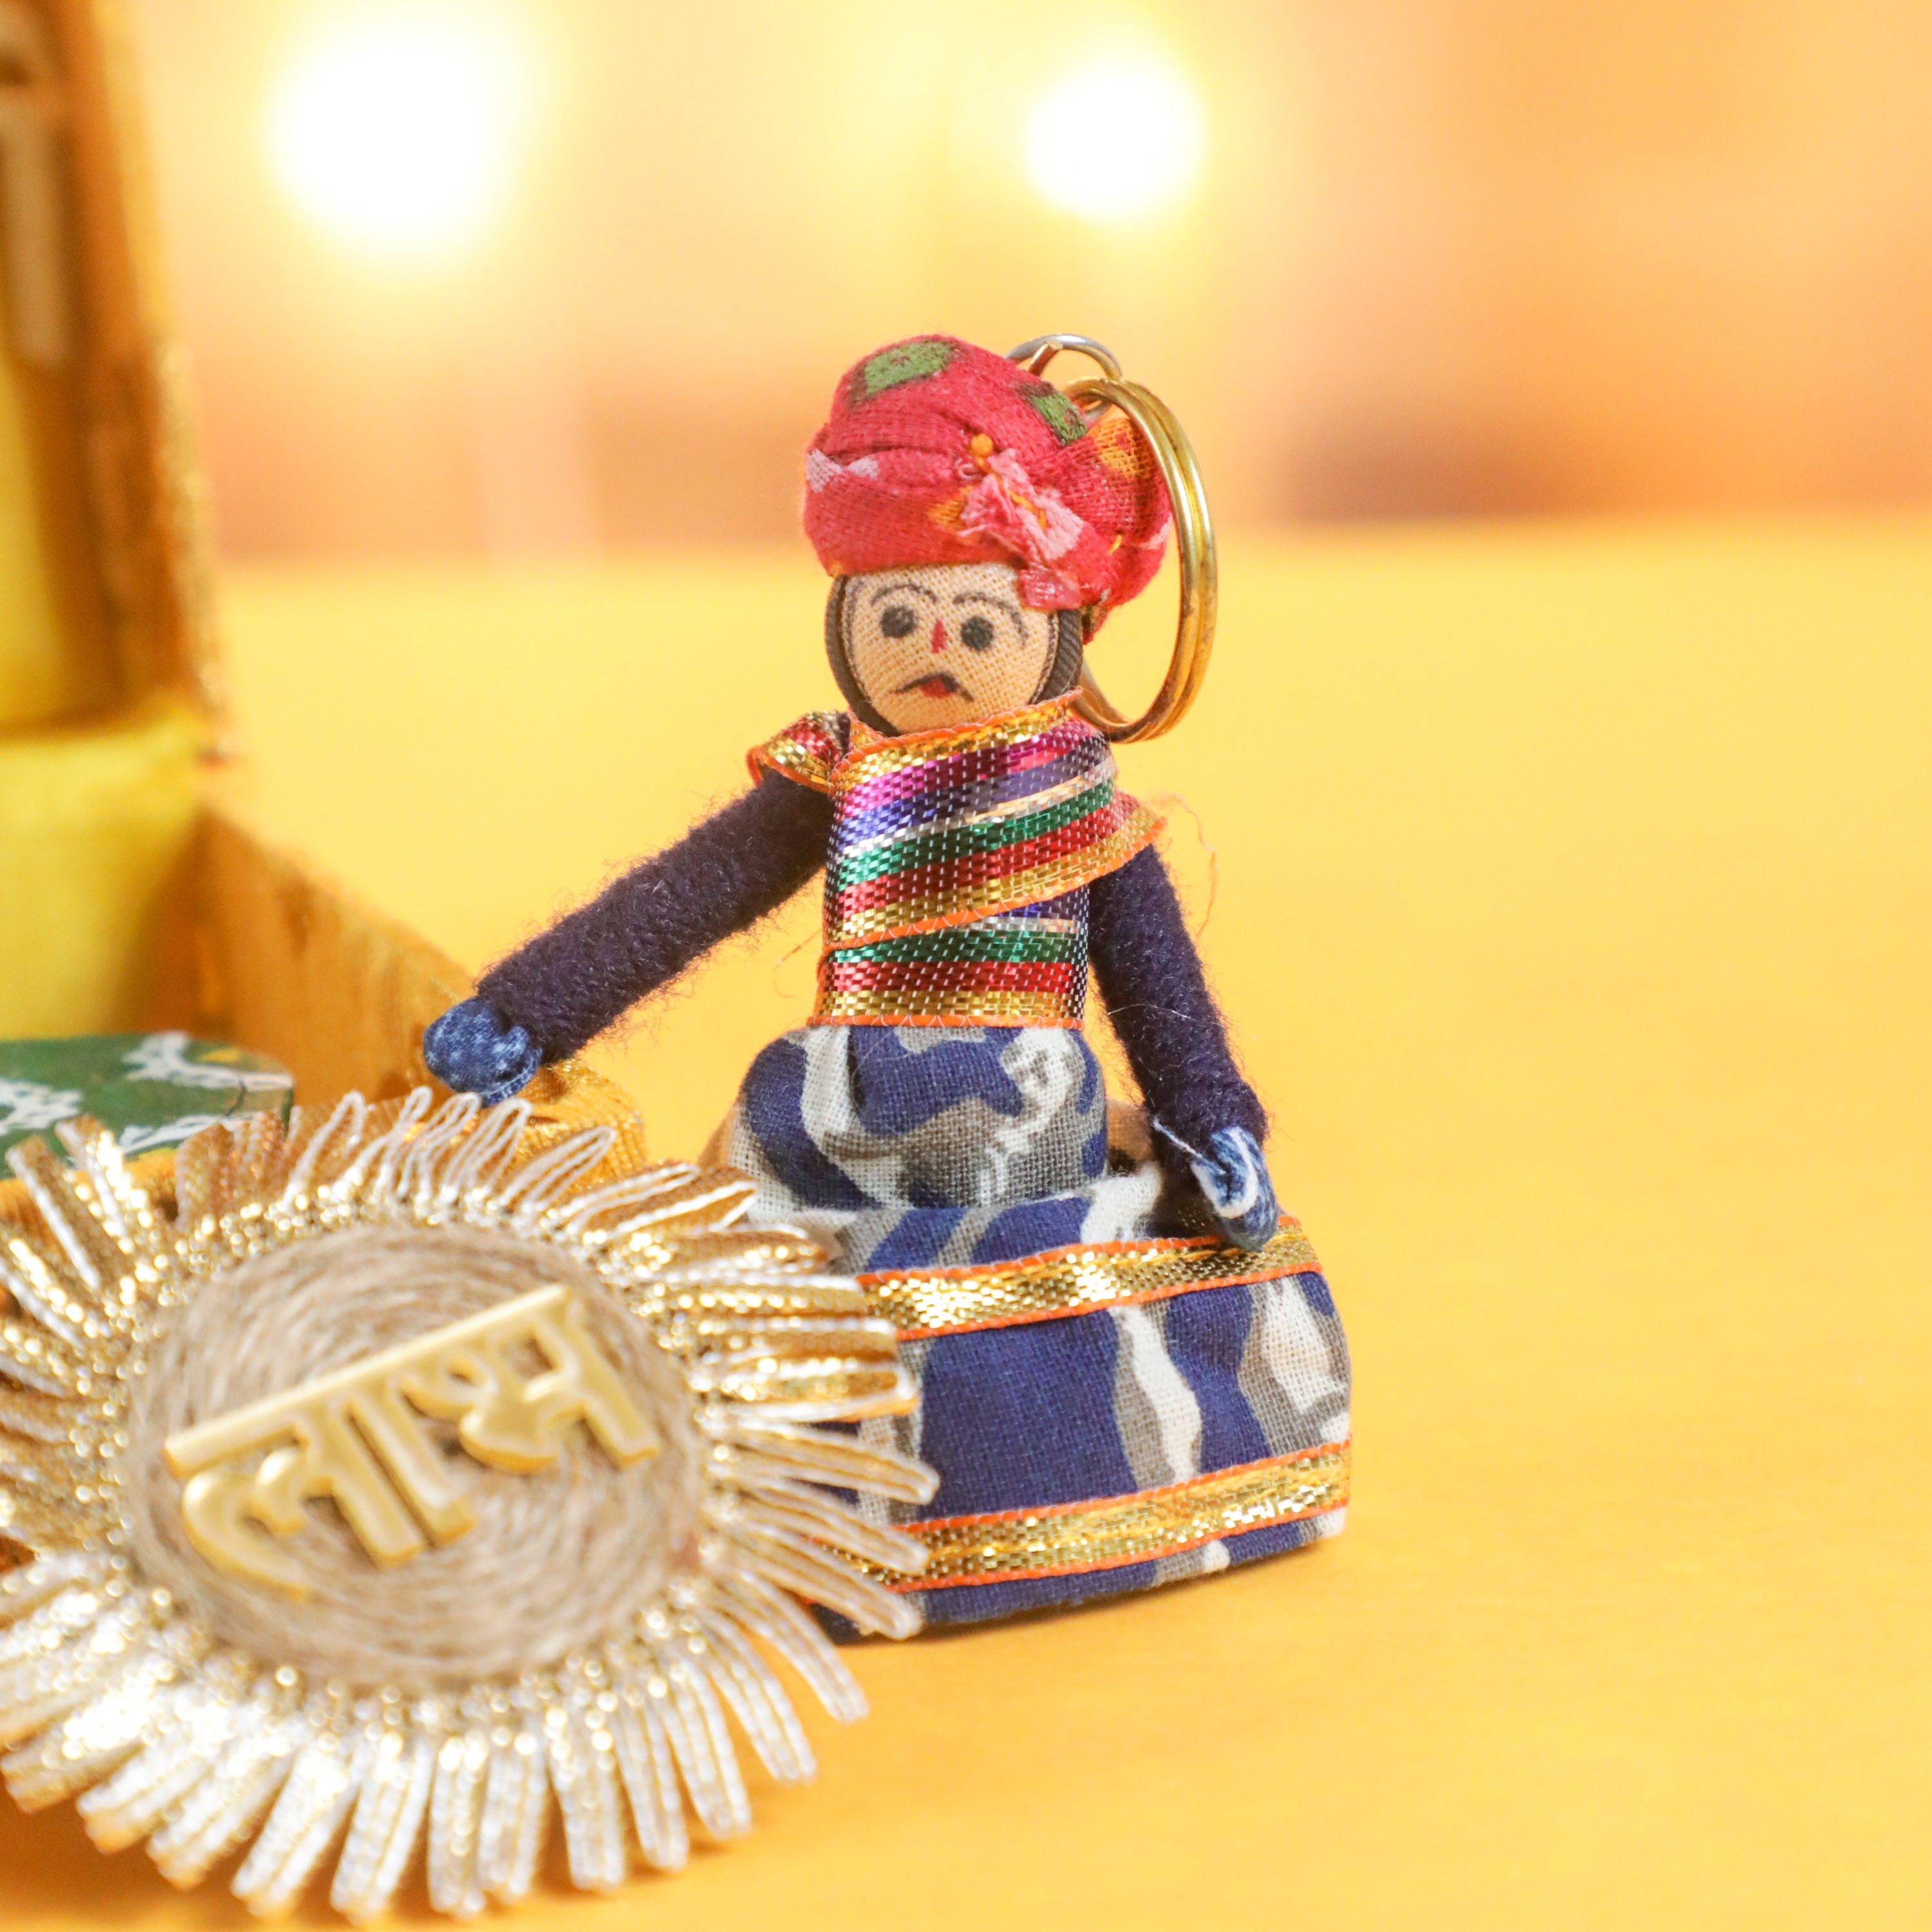 Handmade rajasthani puppet keychain with fabric